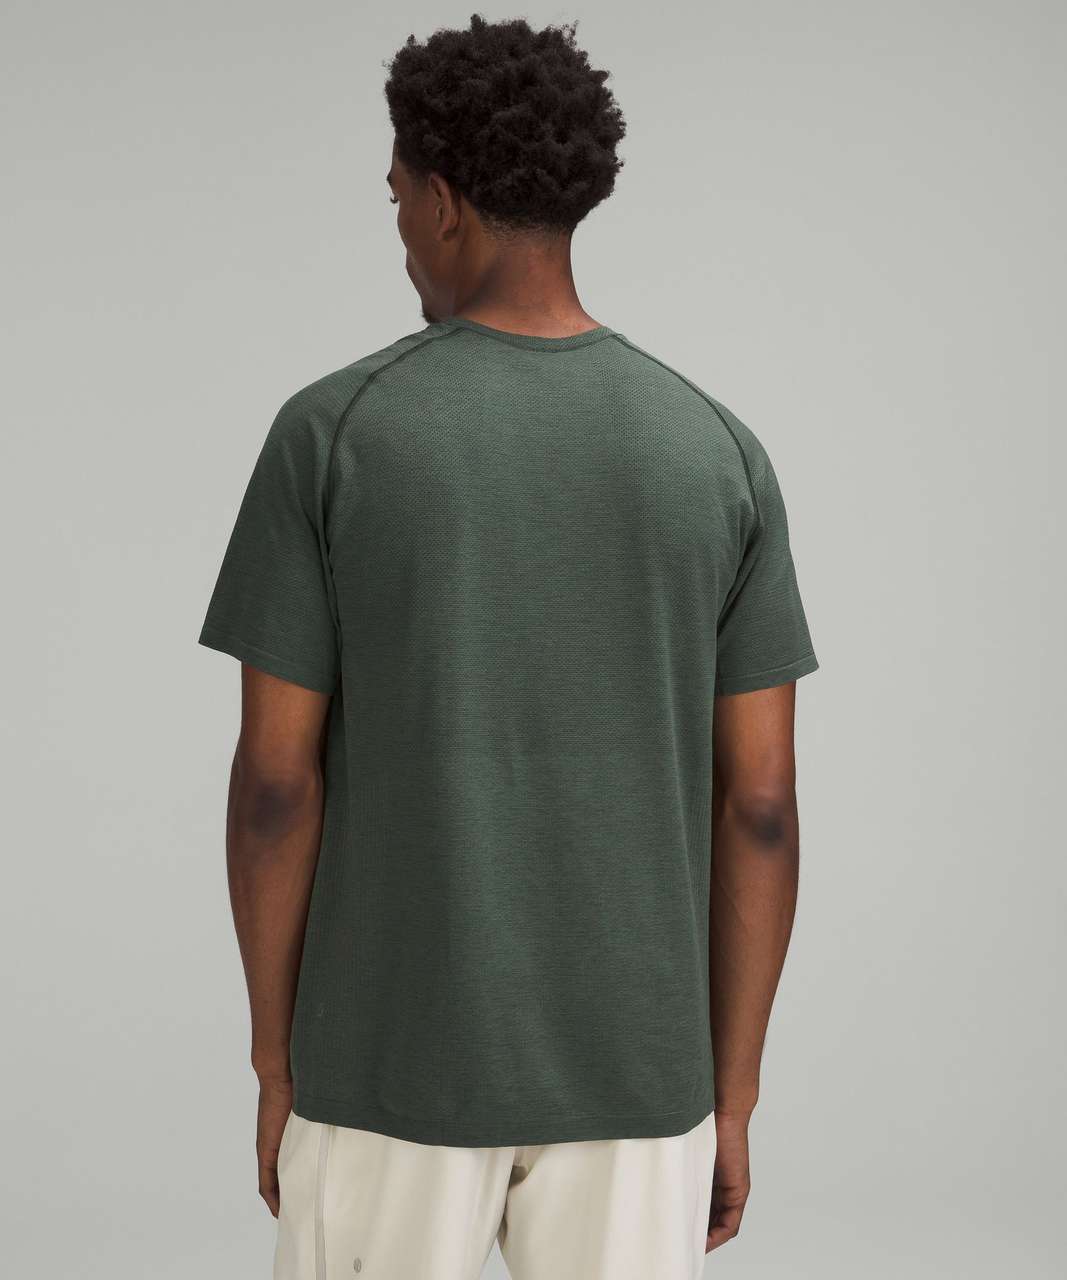 Lululemon Metal Vent Tech Short Sleeve Shirt 2.0 - Smoked Spruce / Carob Brown